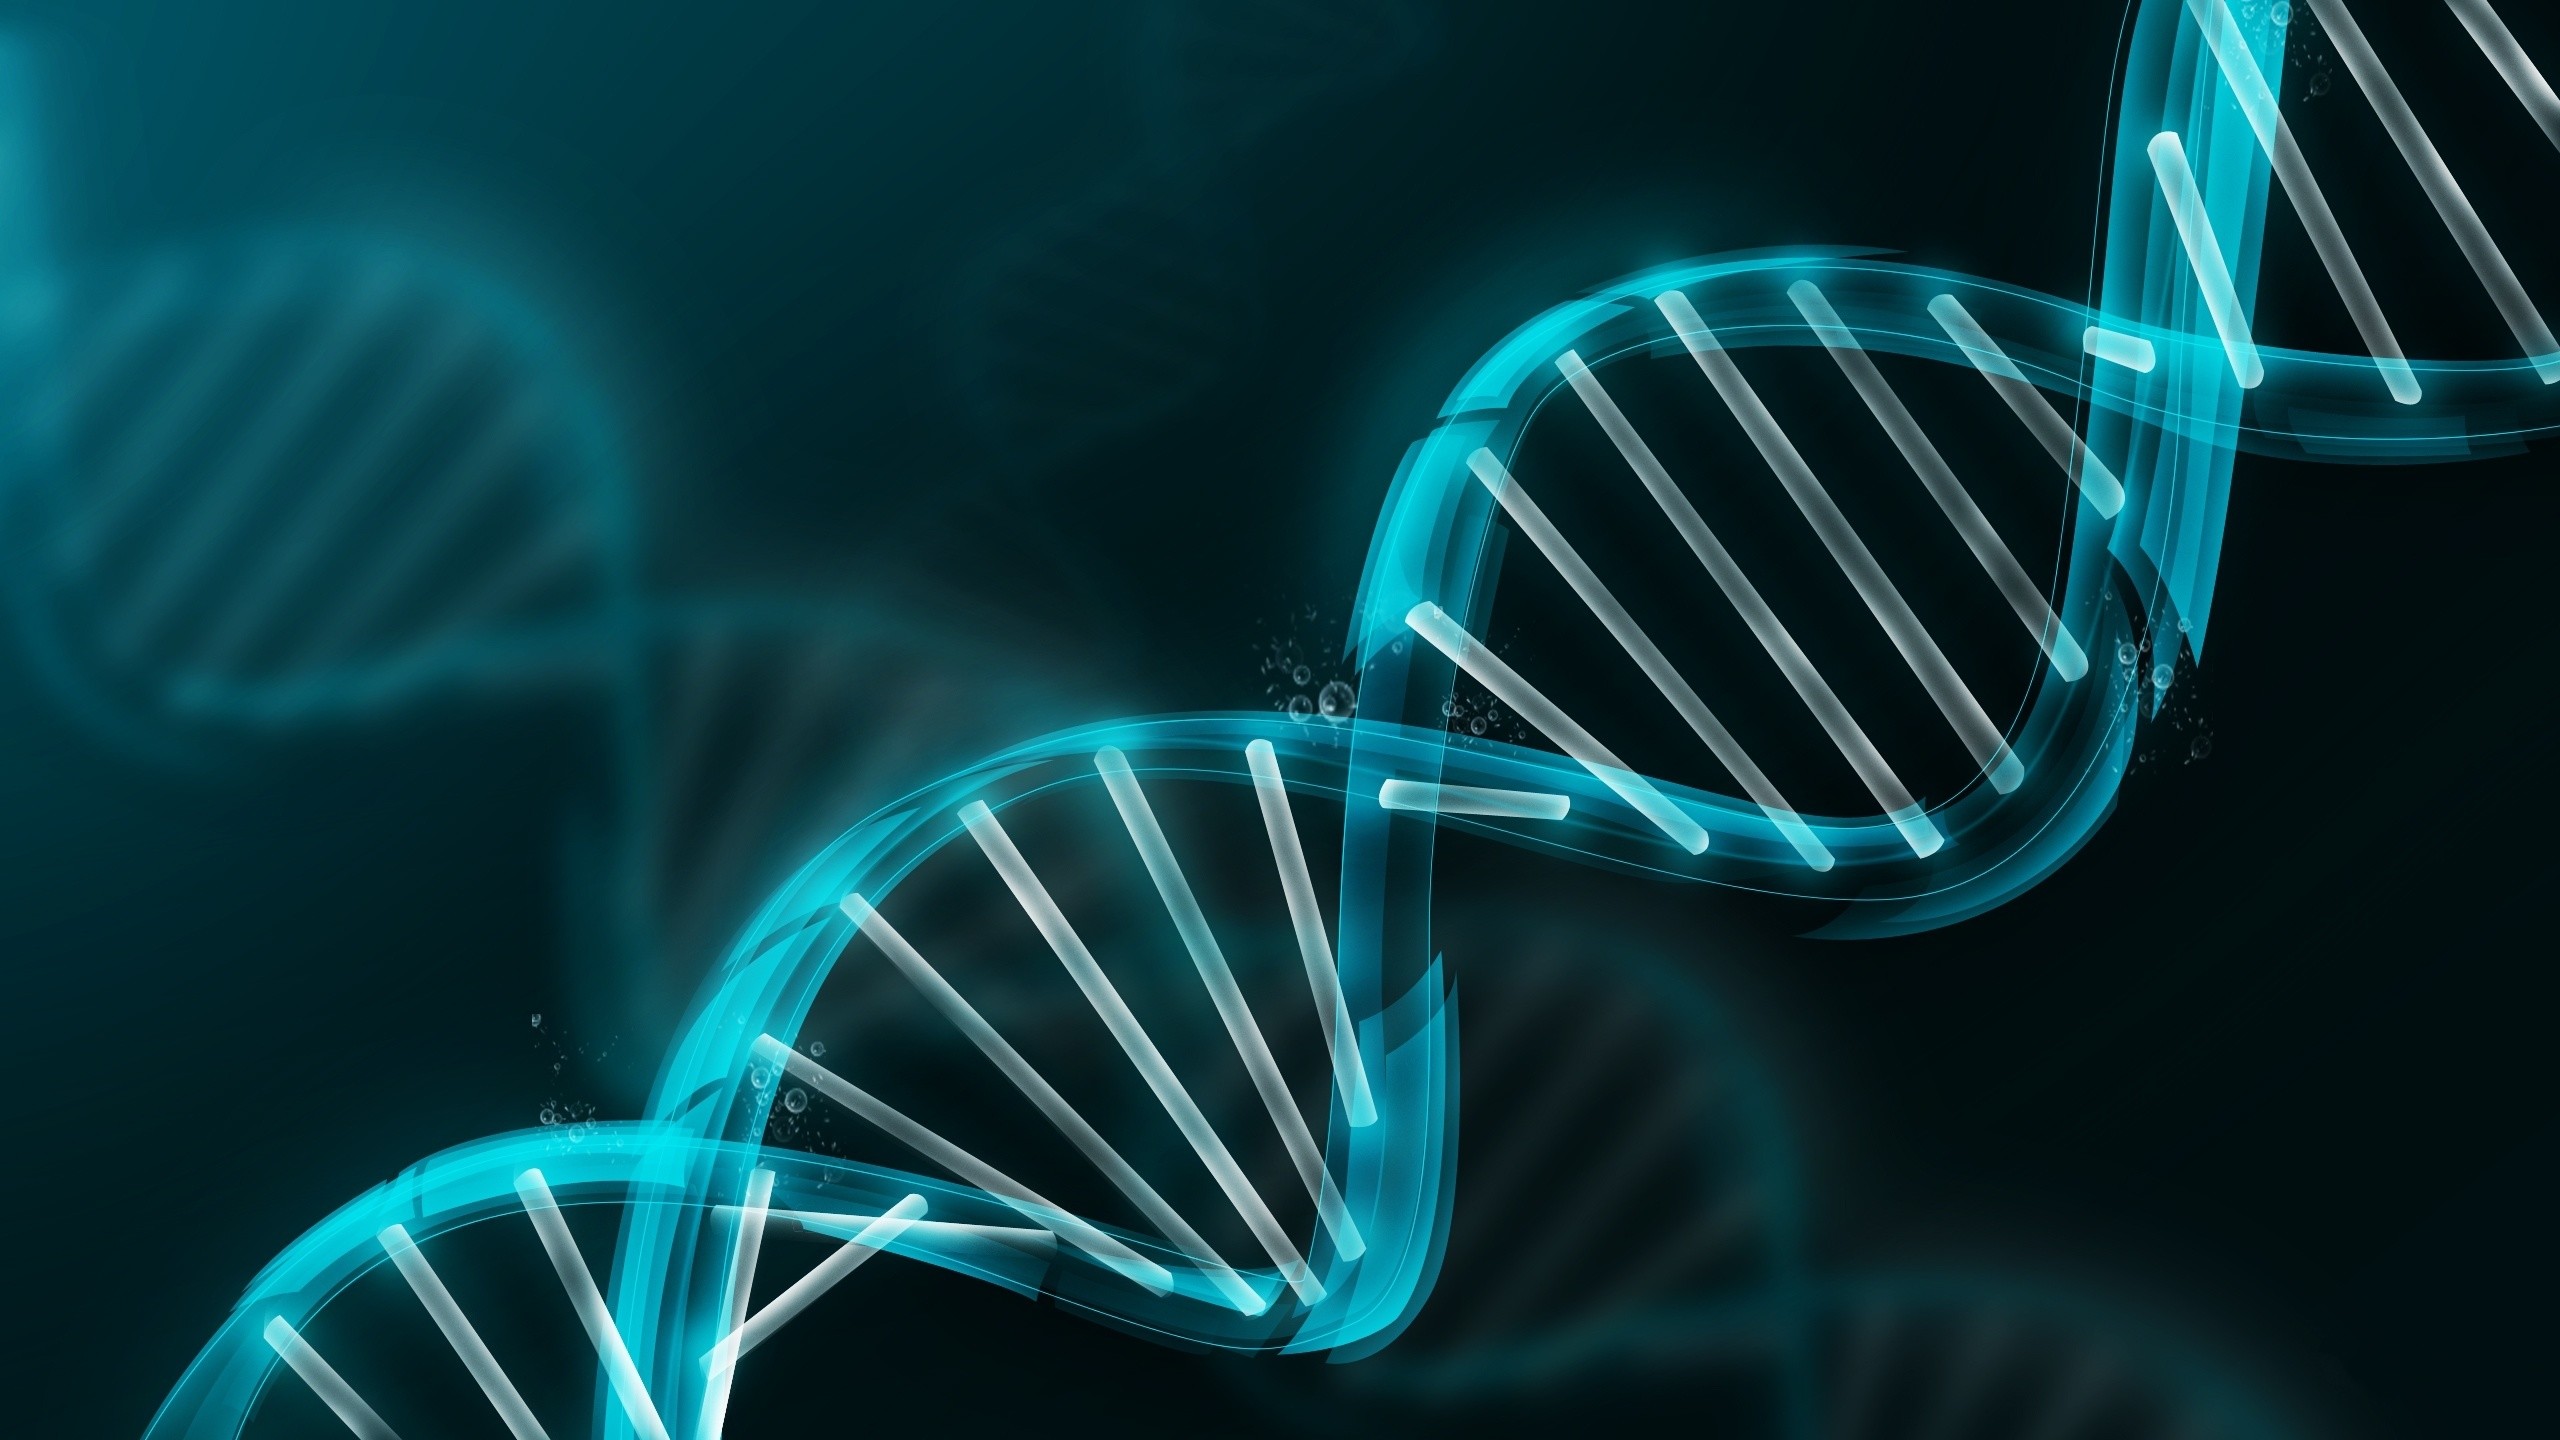 Bio Science: DNA HD Wallpaper